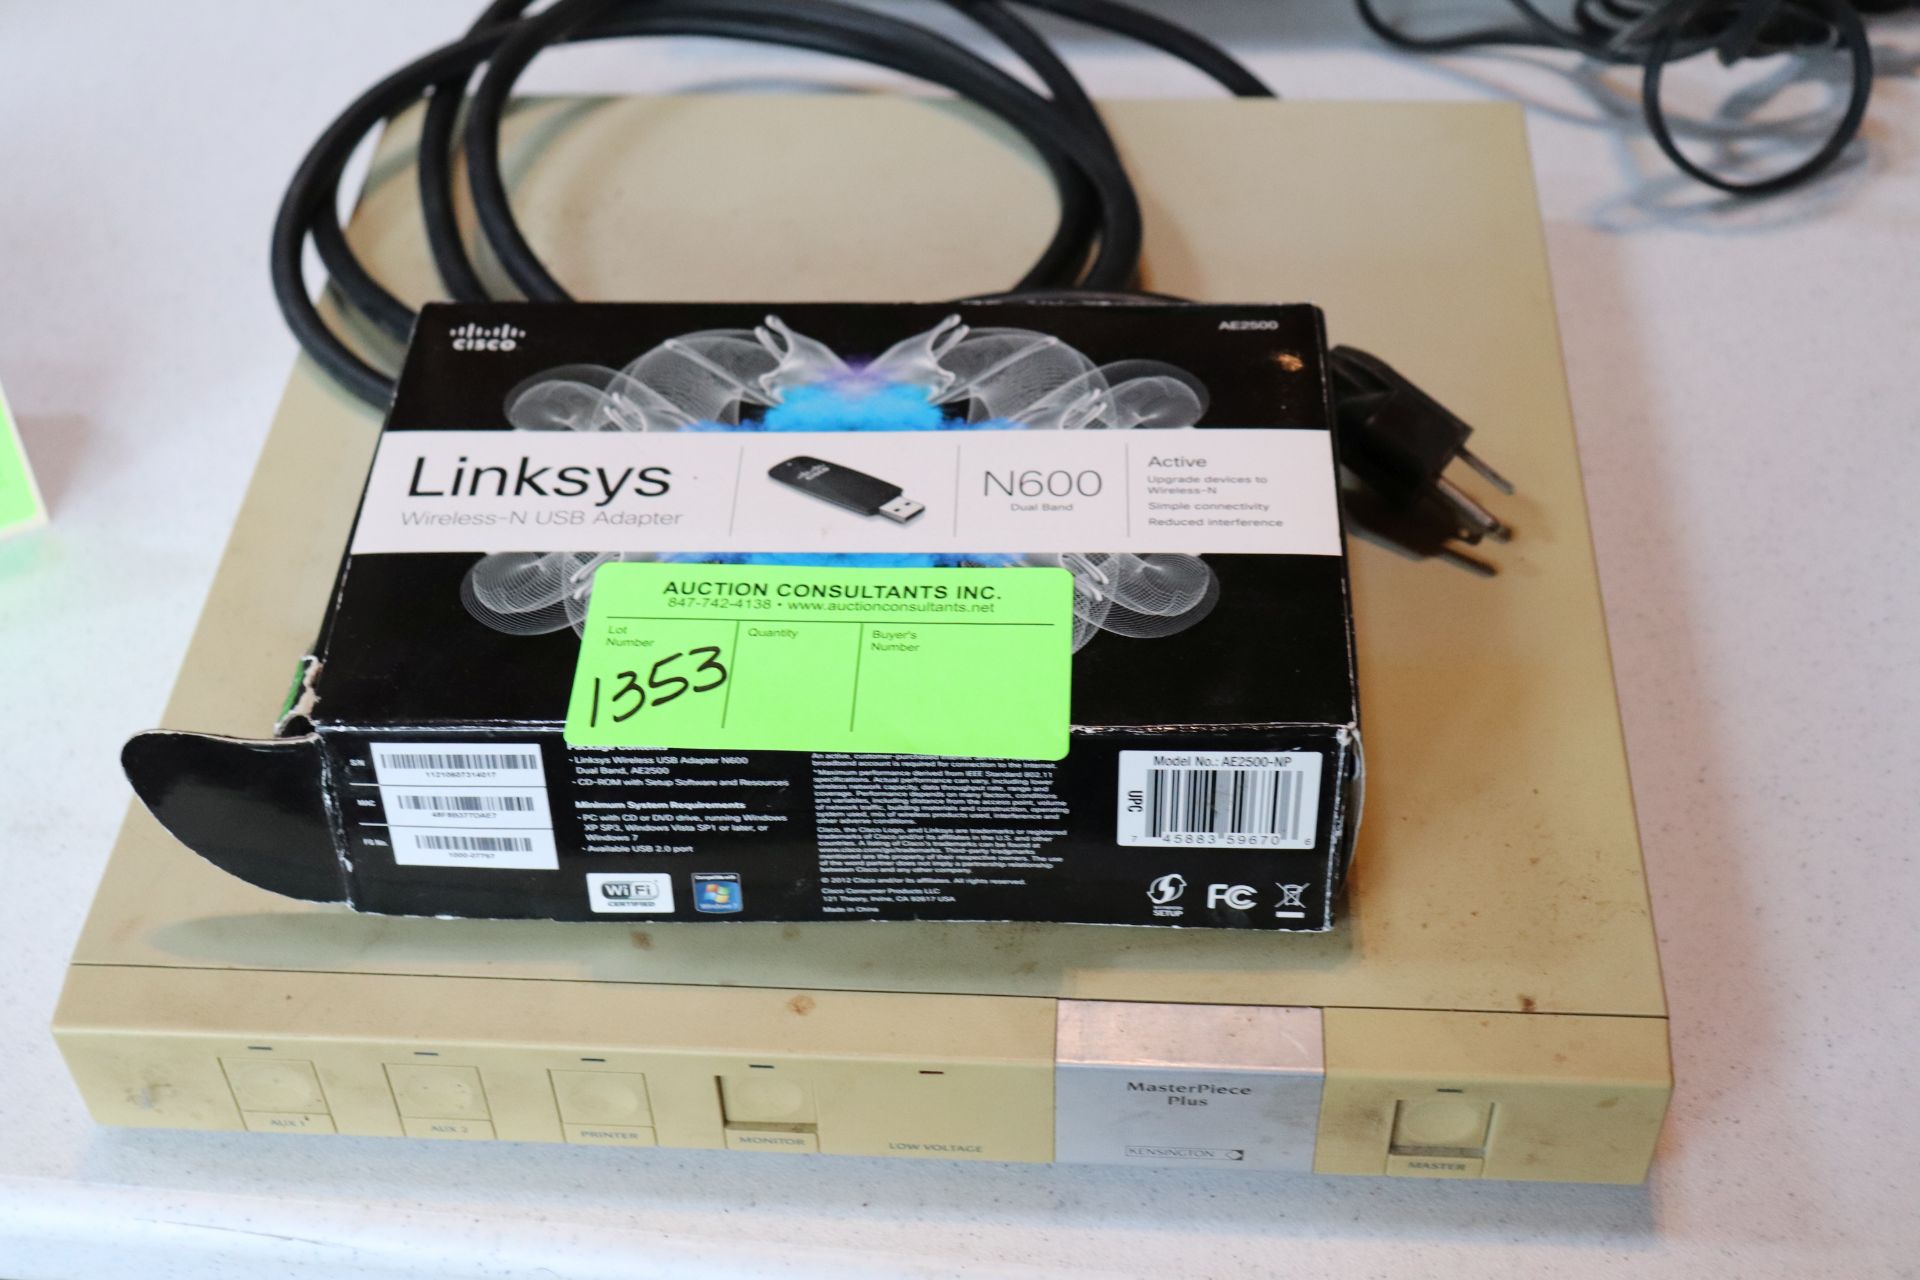 Lynx wireless USB adapter and Masterpiece Plus Plug control system